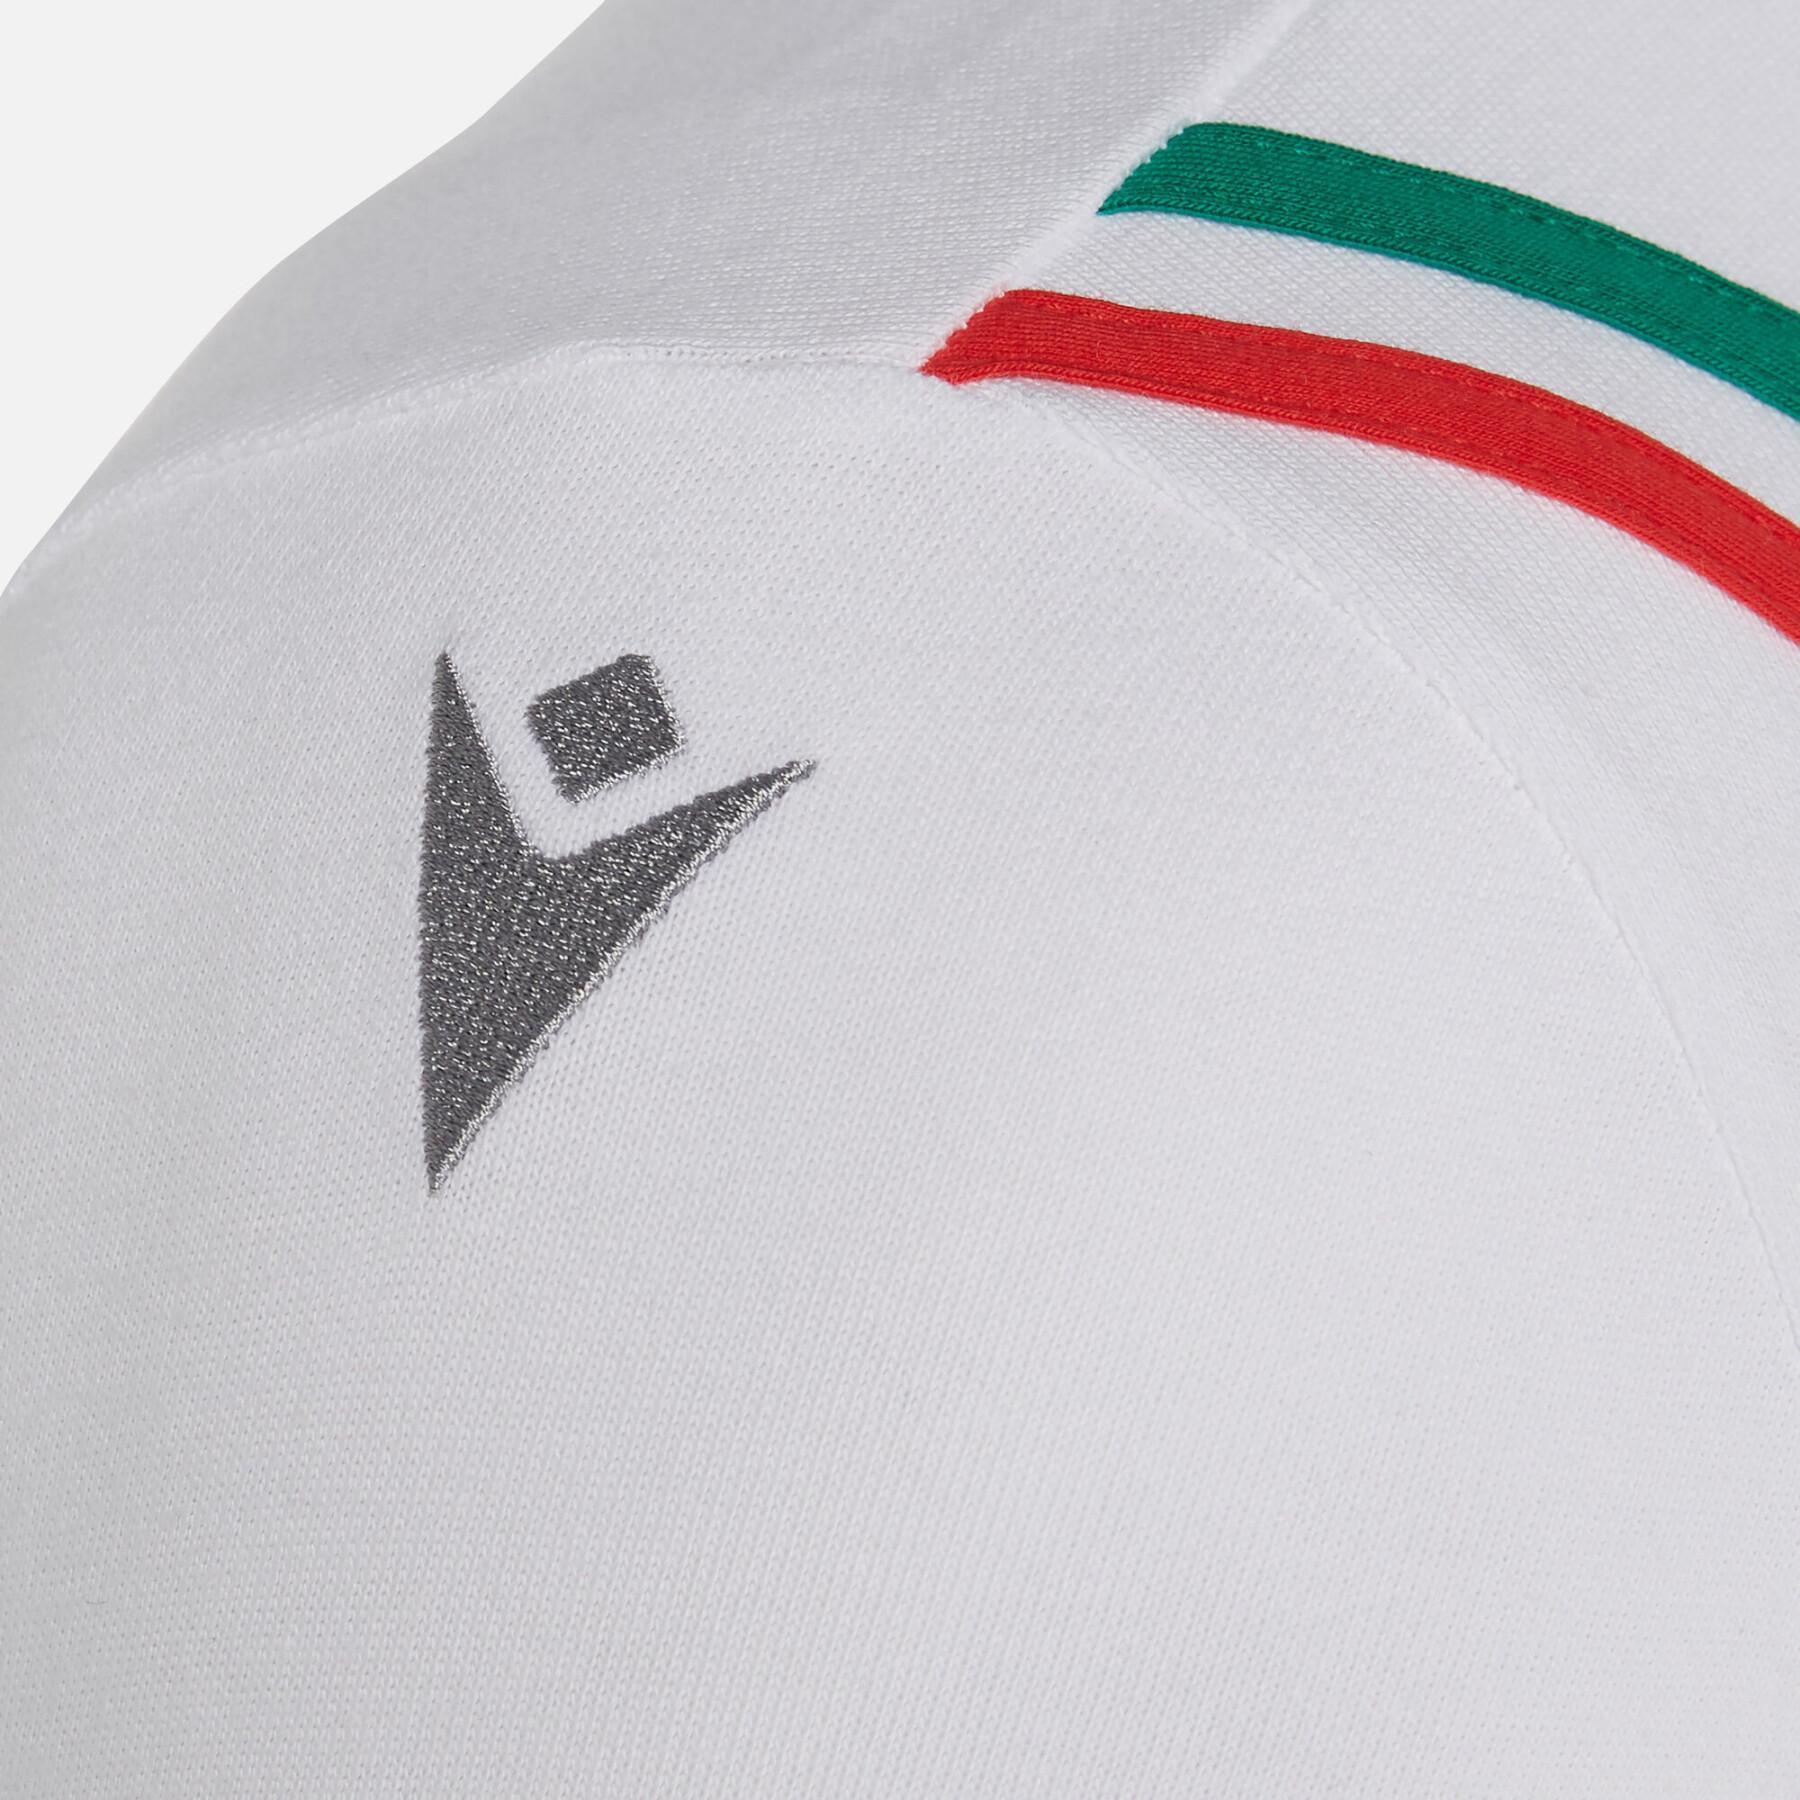 Camiseta de aficionado Italie 2019/20